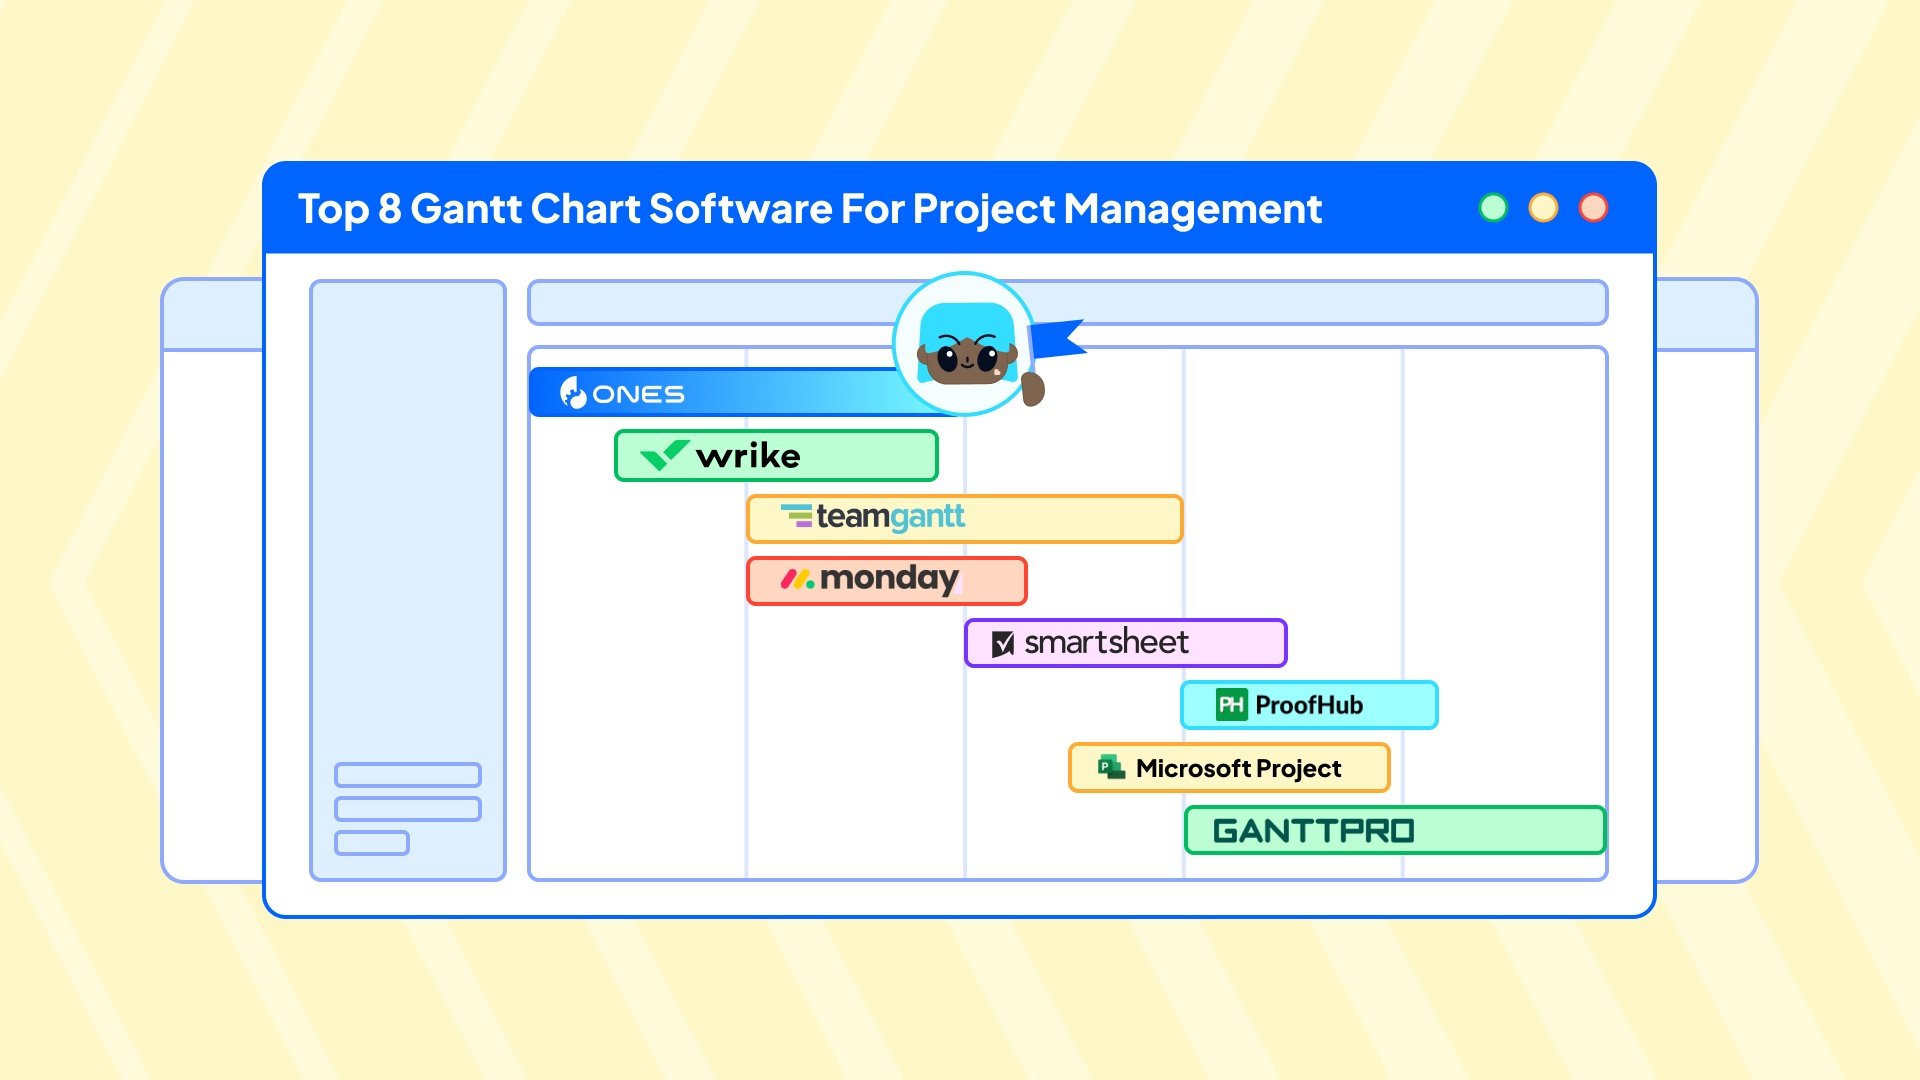 Tips-Top 8 Gantt Chart Software For Project Management